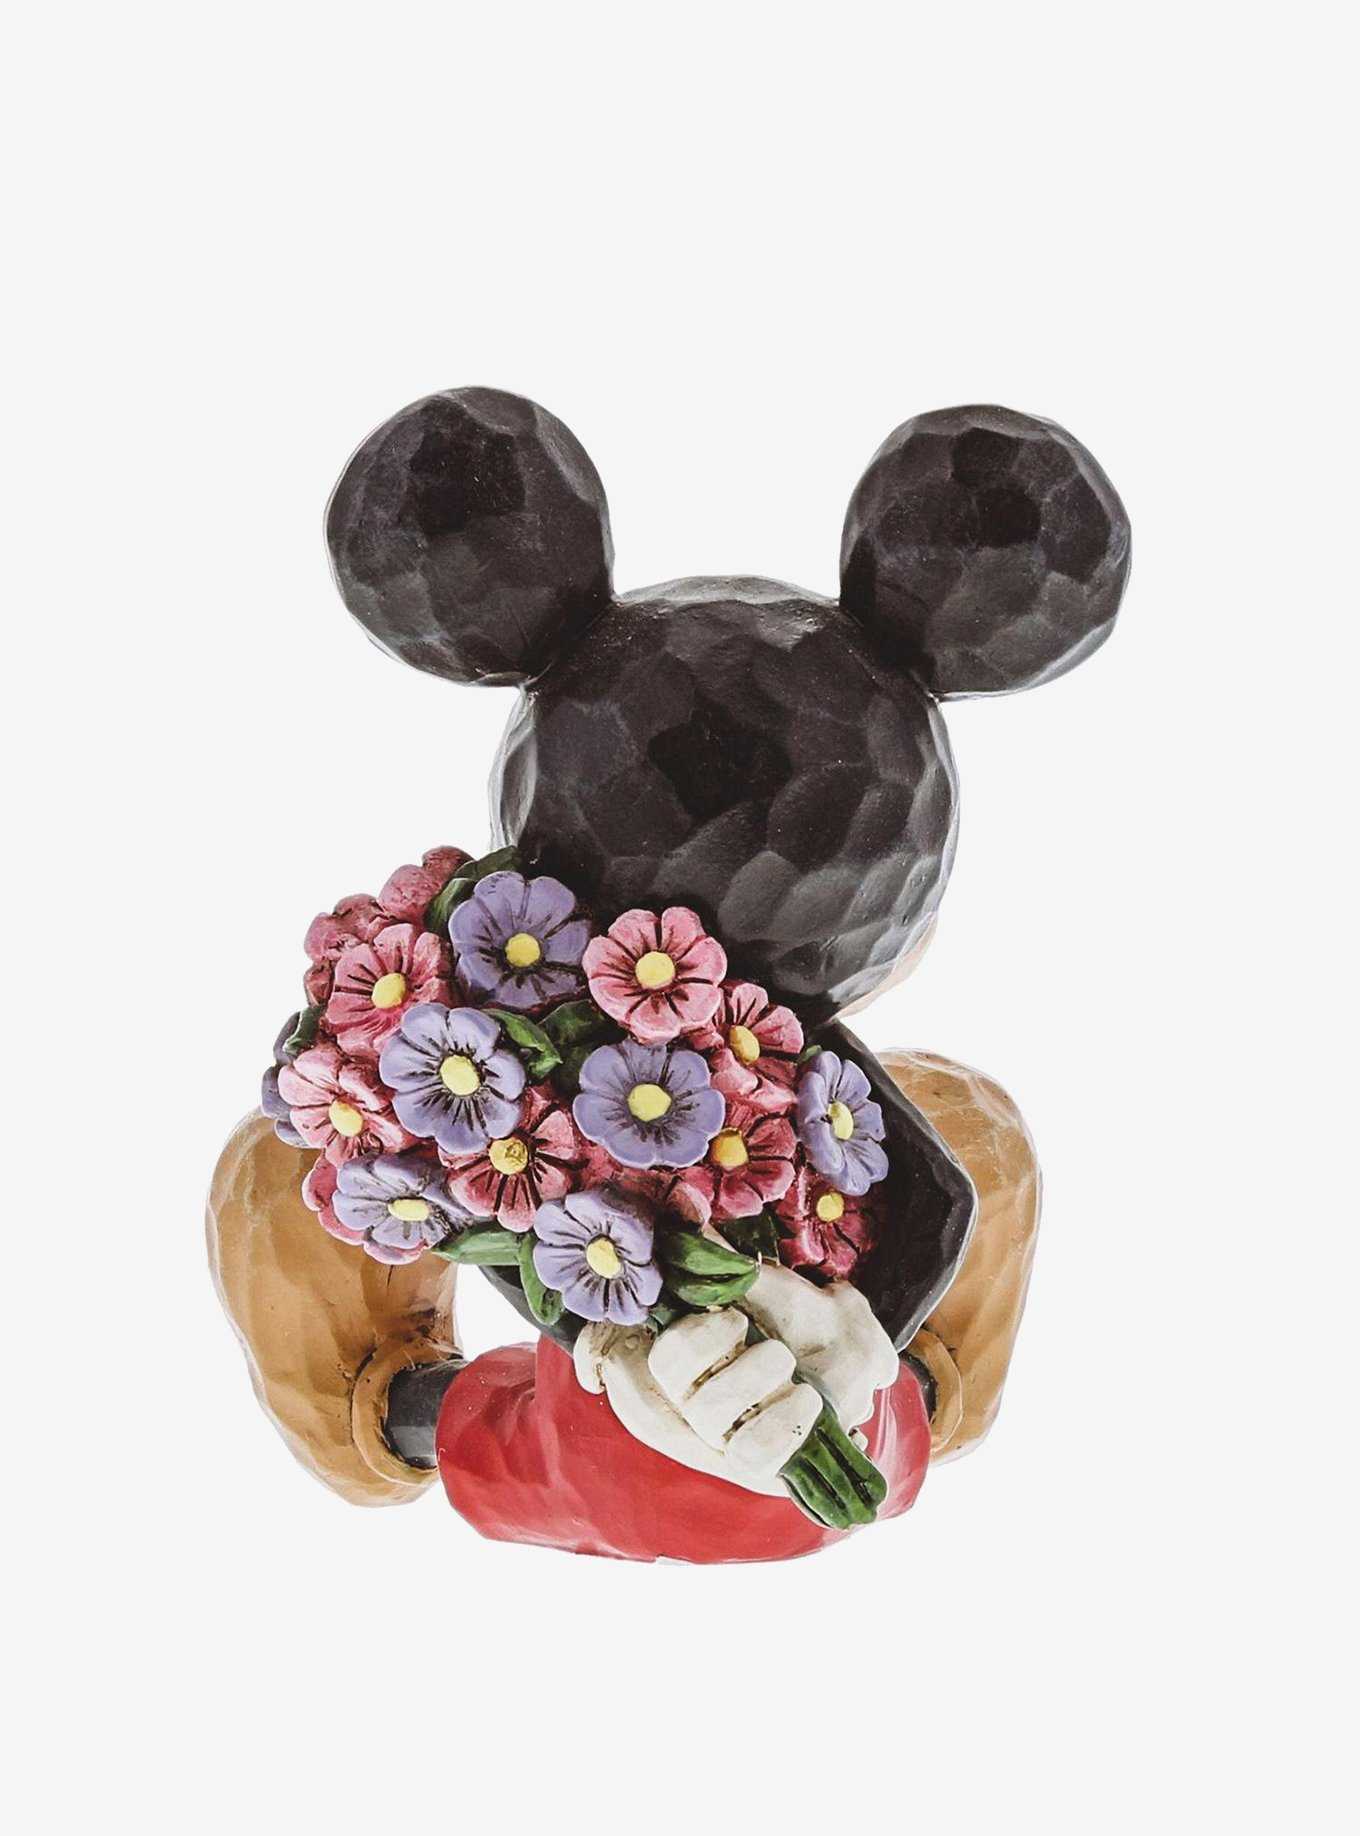 Disney Mickey Mouse Mini Figure, , hi-res